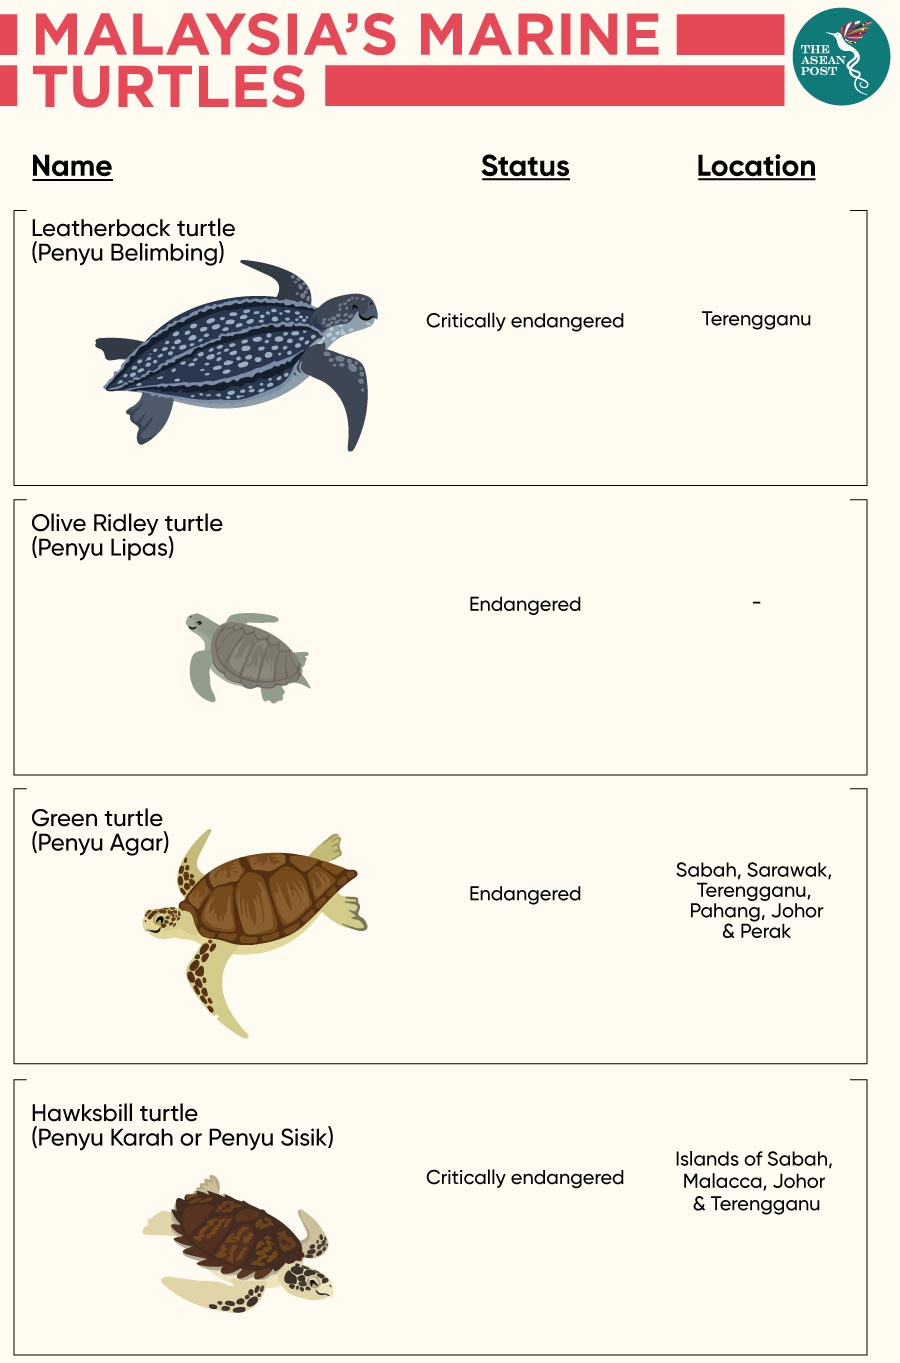 Malaysia's turtles